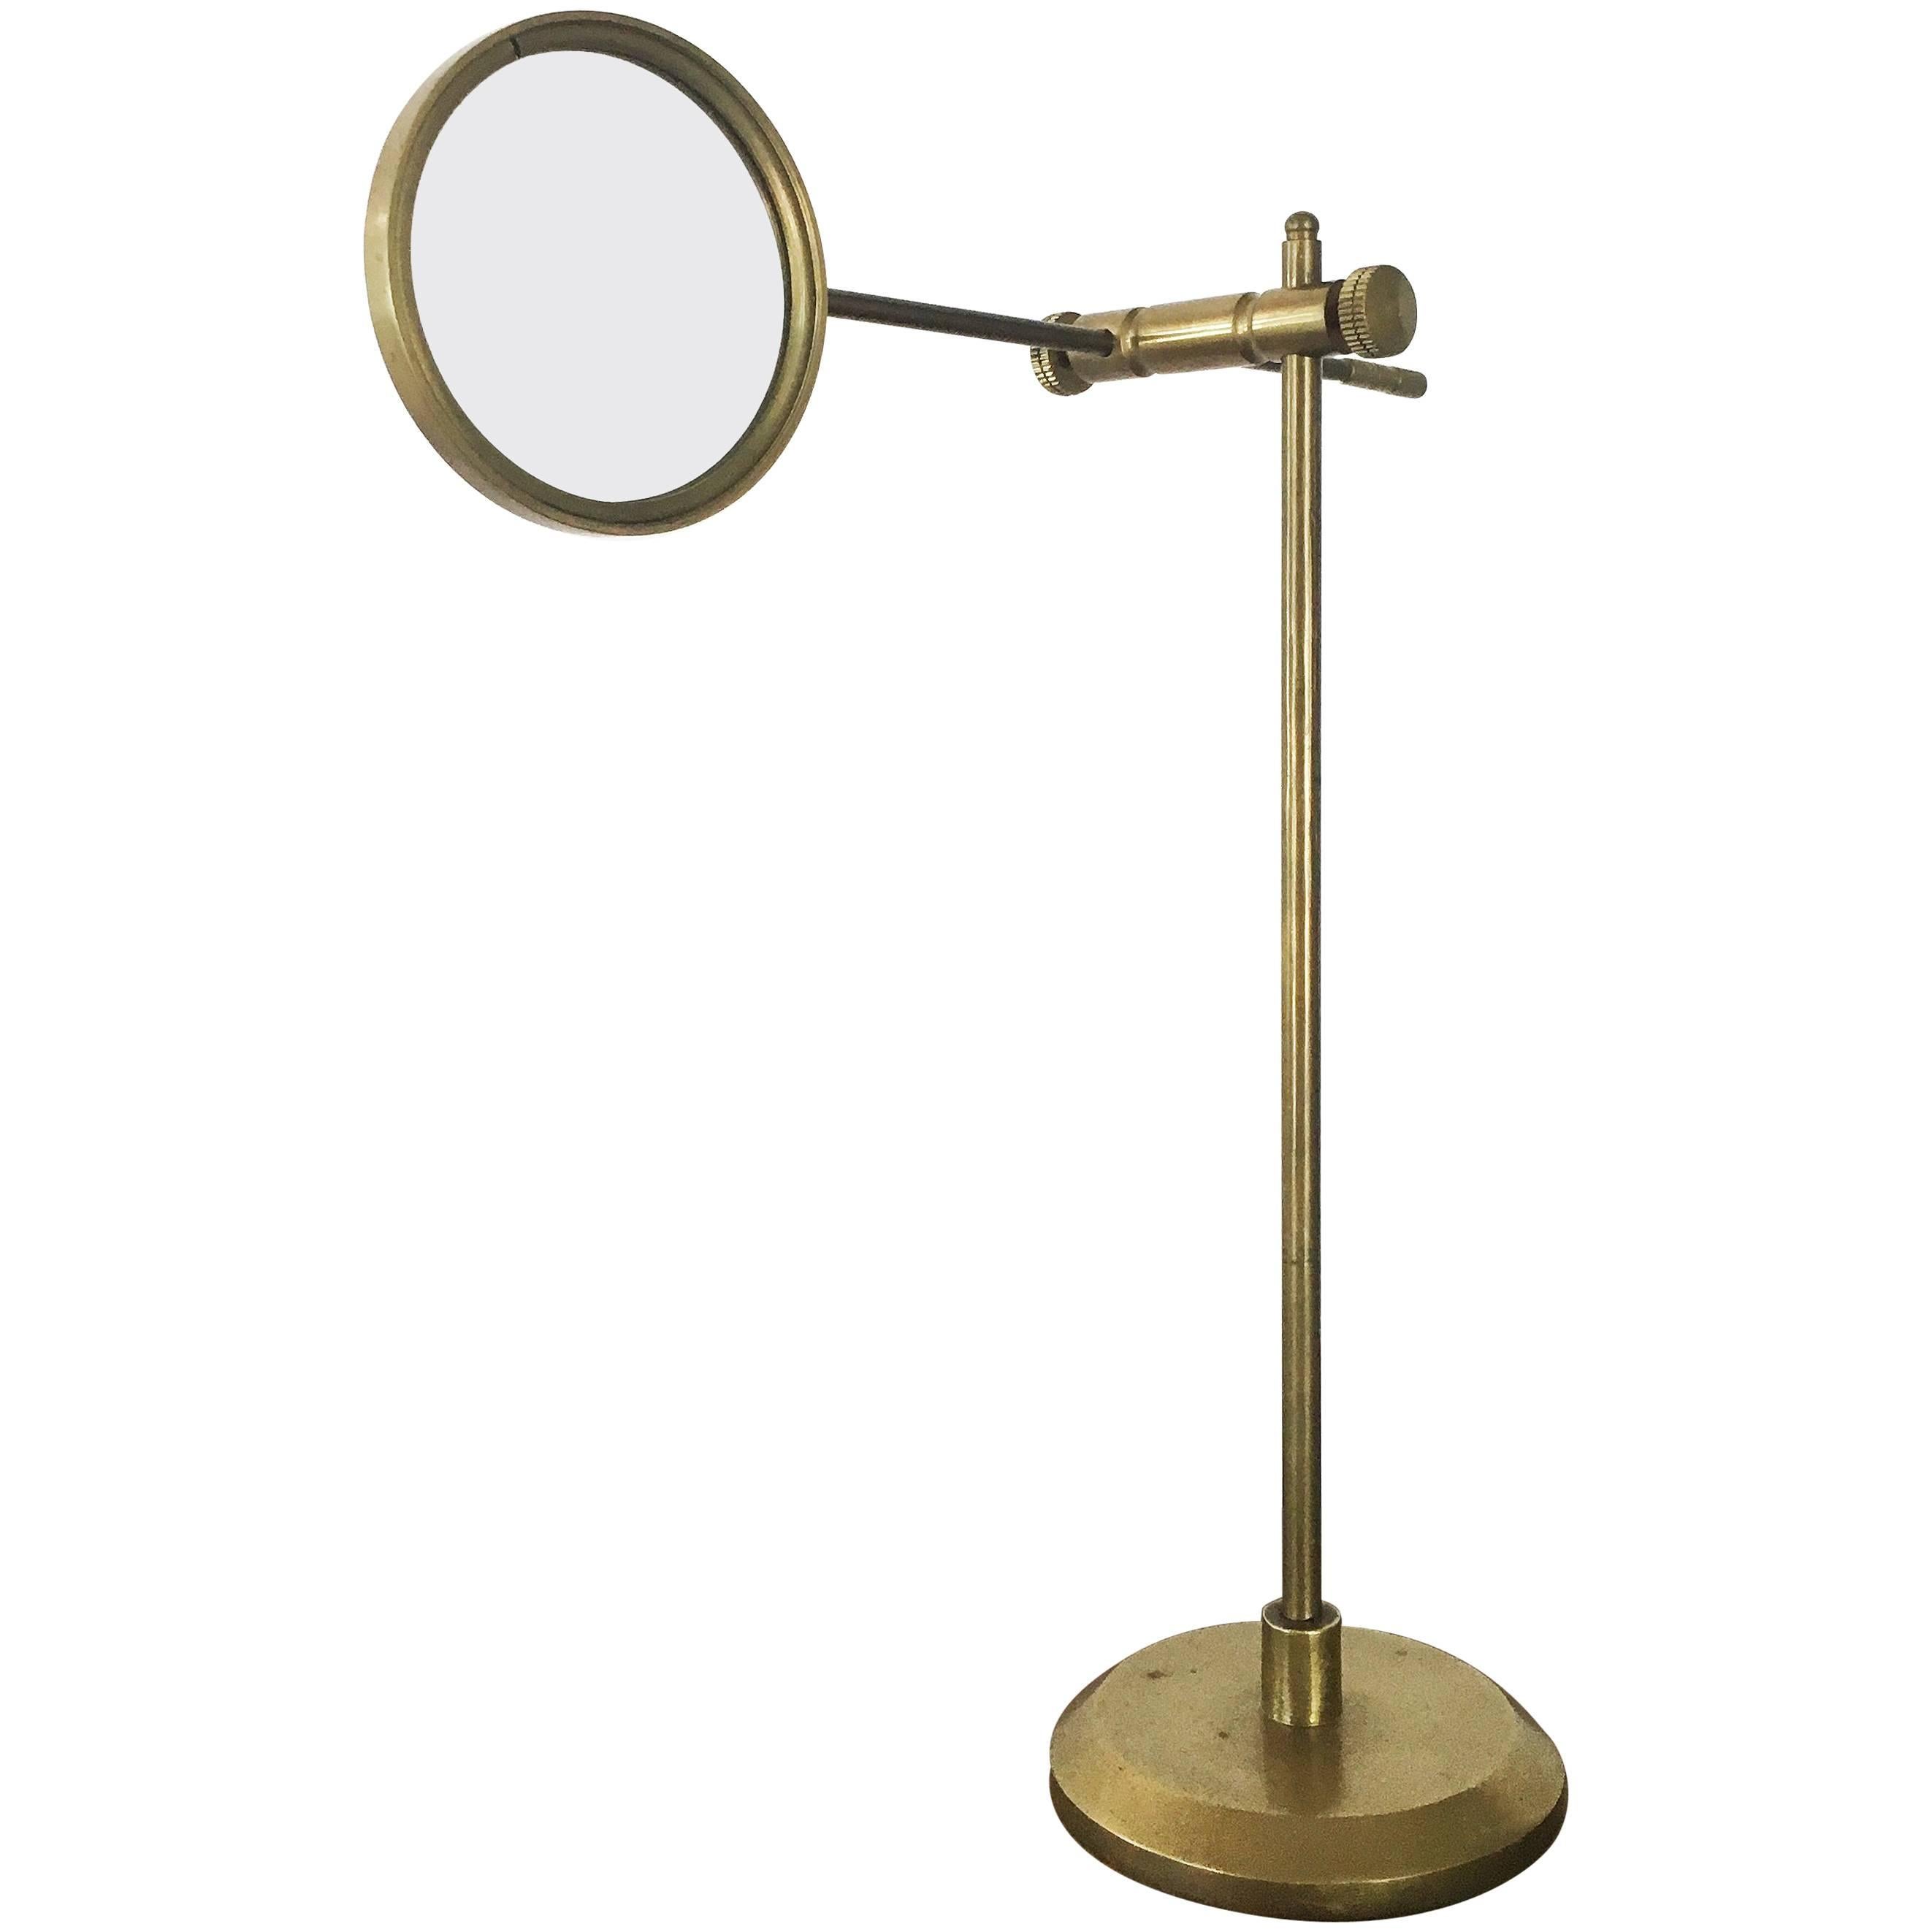 Vintage Adjustable Jeweler's Magnifying Glass on a Brass Base